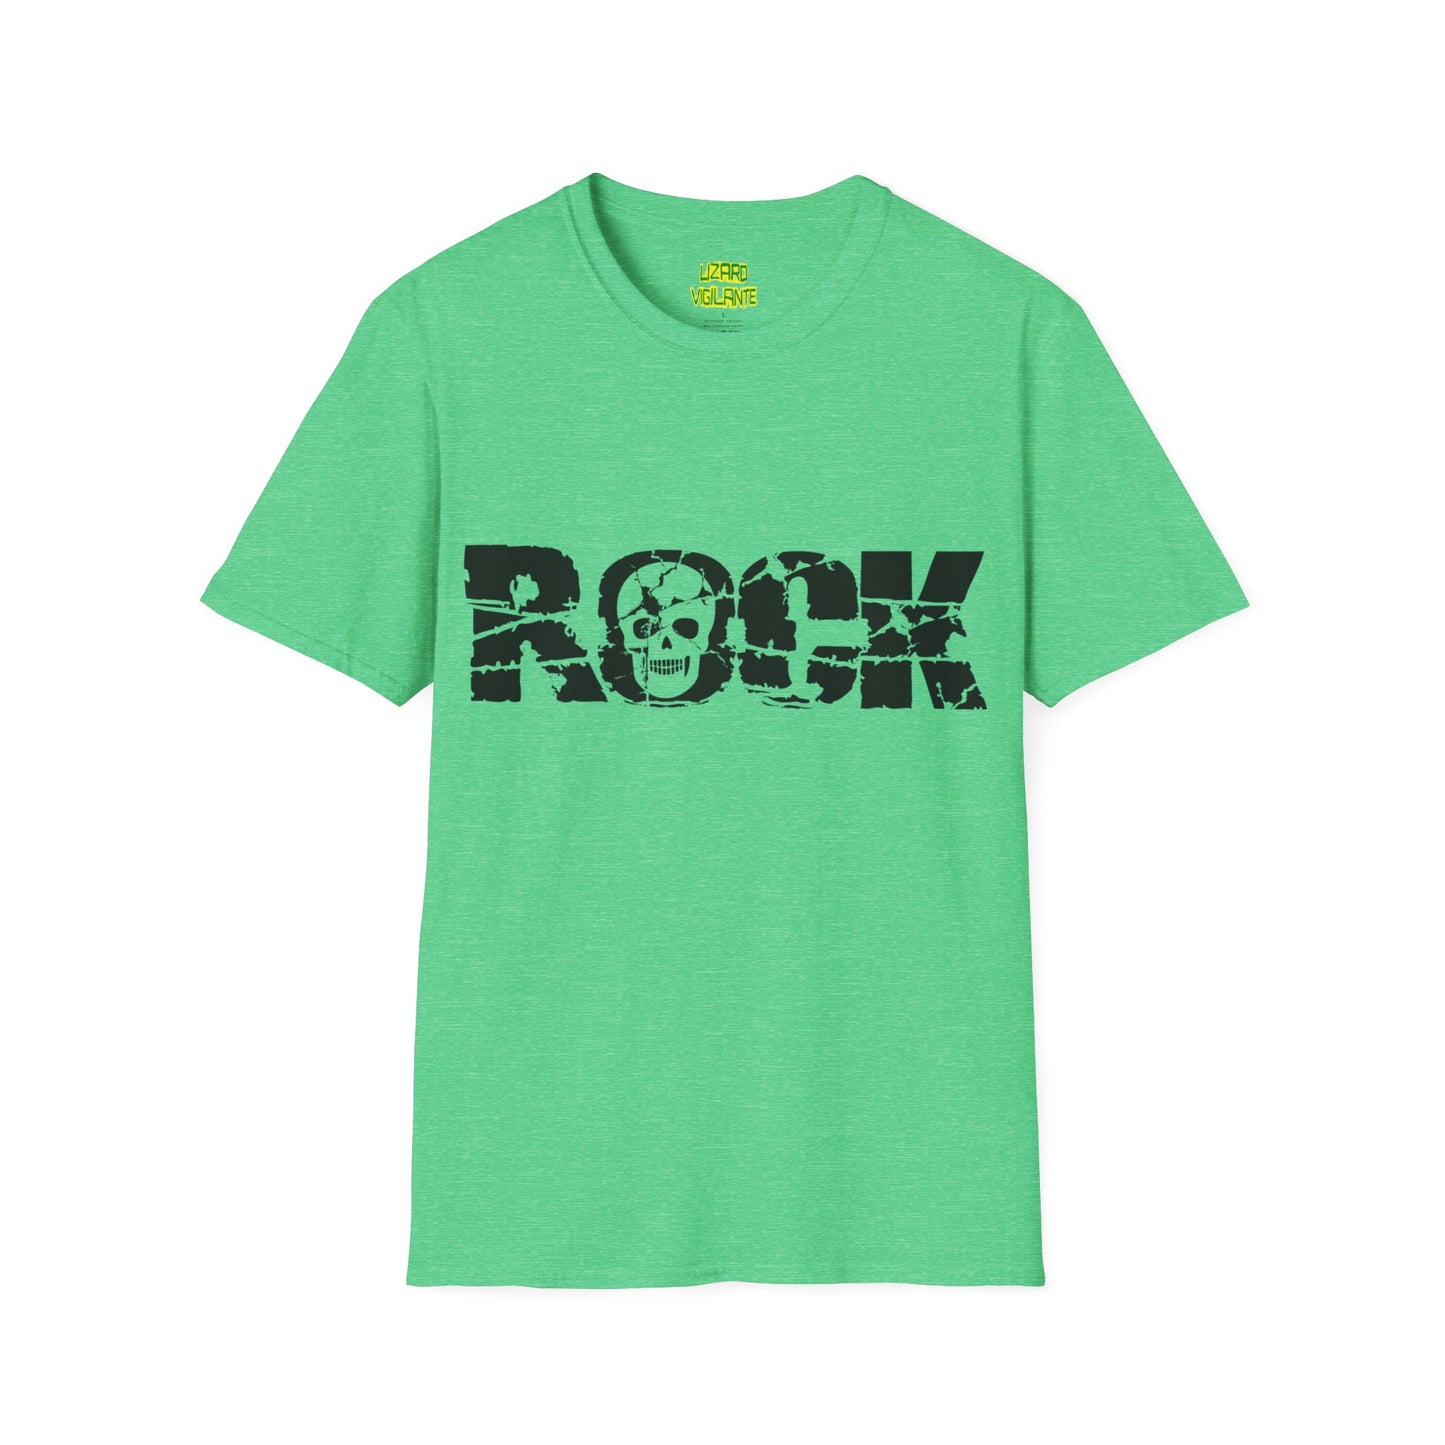 Cracked Rock Skull Unisex Softstyle T-Shirt - Lizard Vigilante